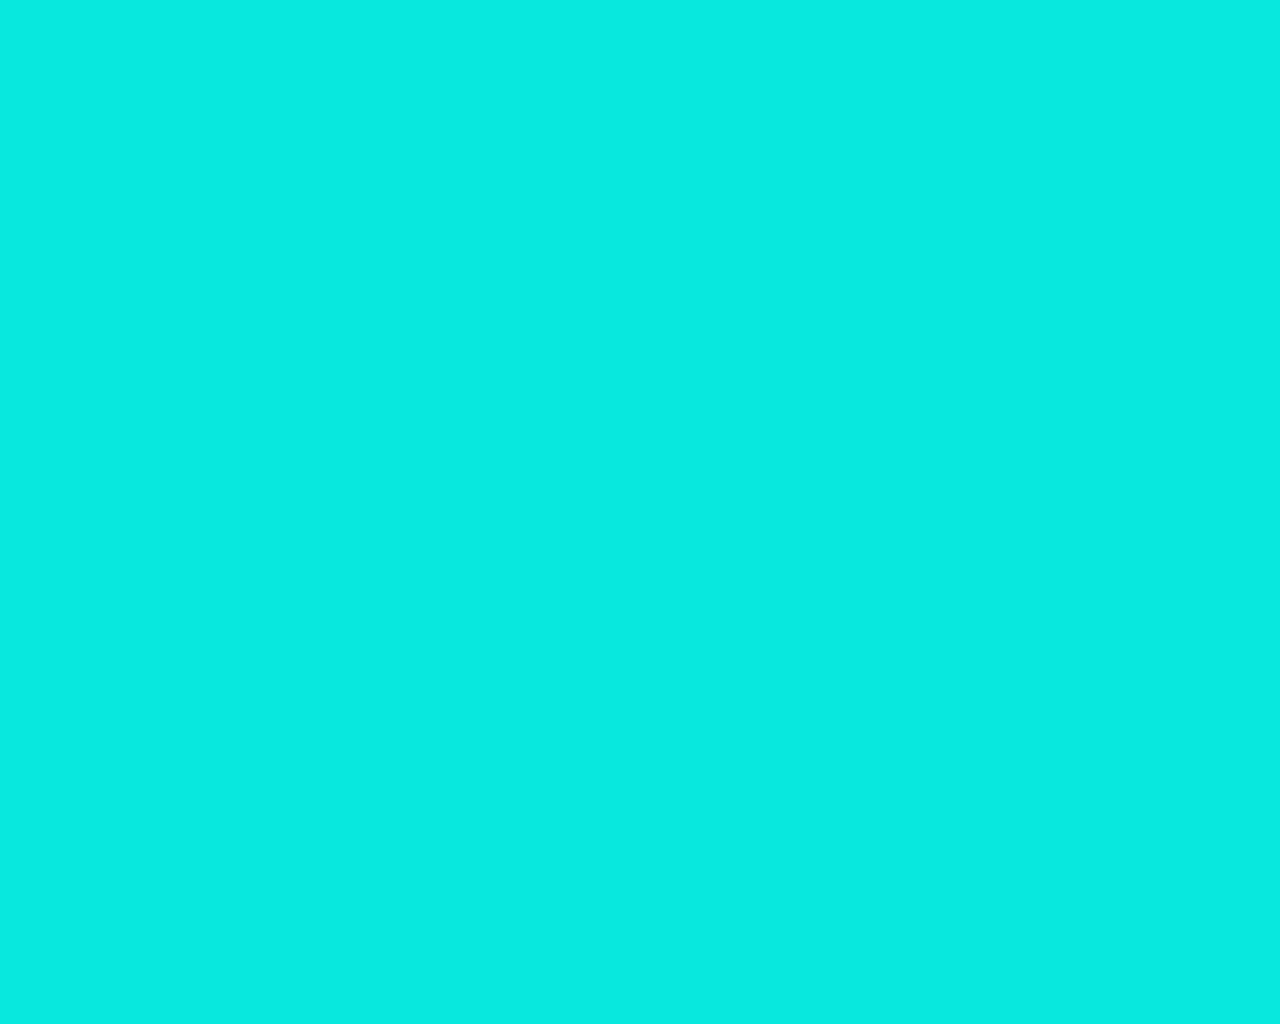 Plain Turquoise Background Green